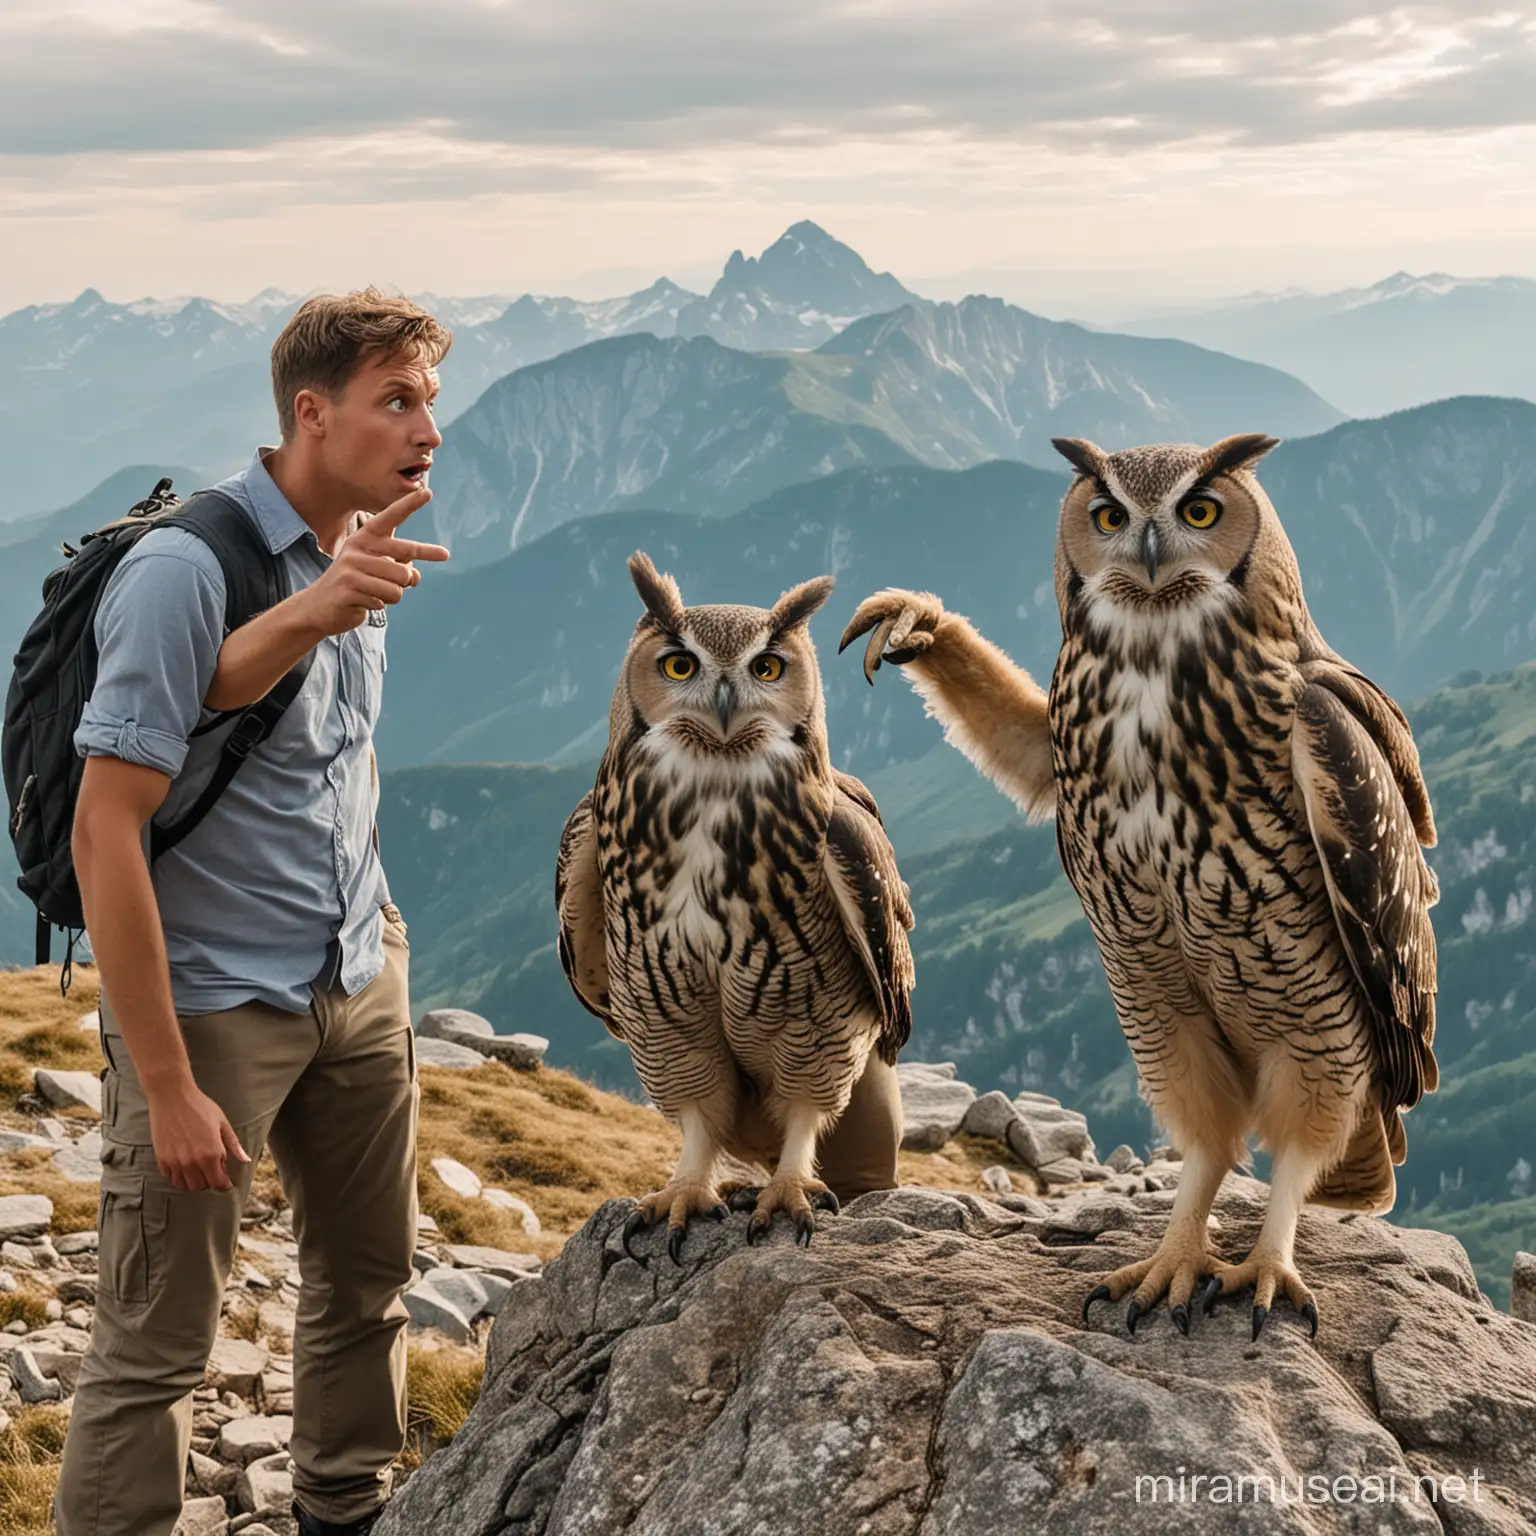 German Tourists Discovering Owl on Mountain Peak